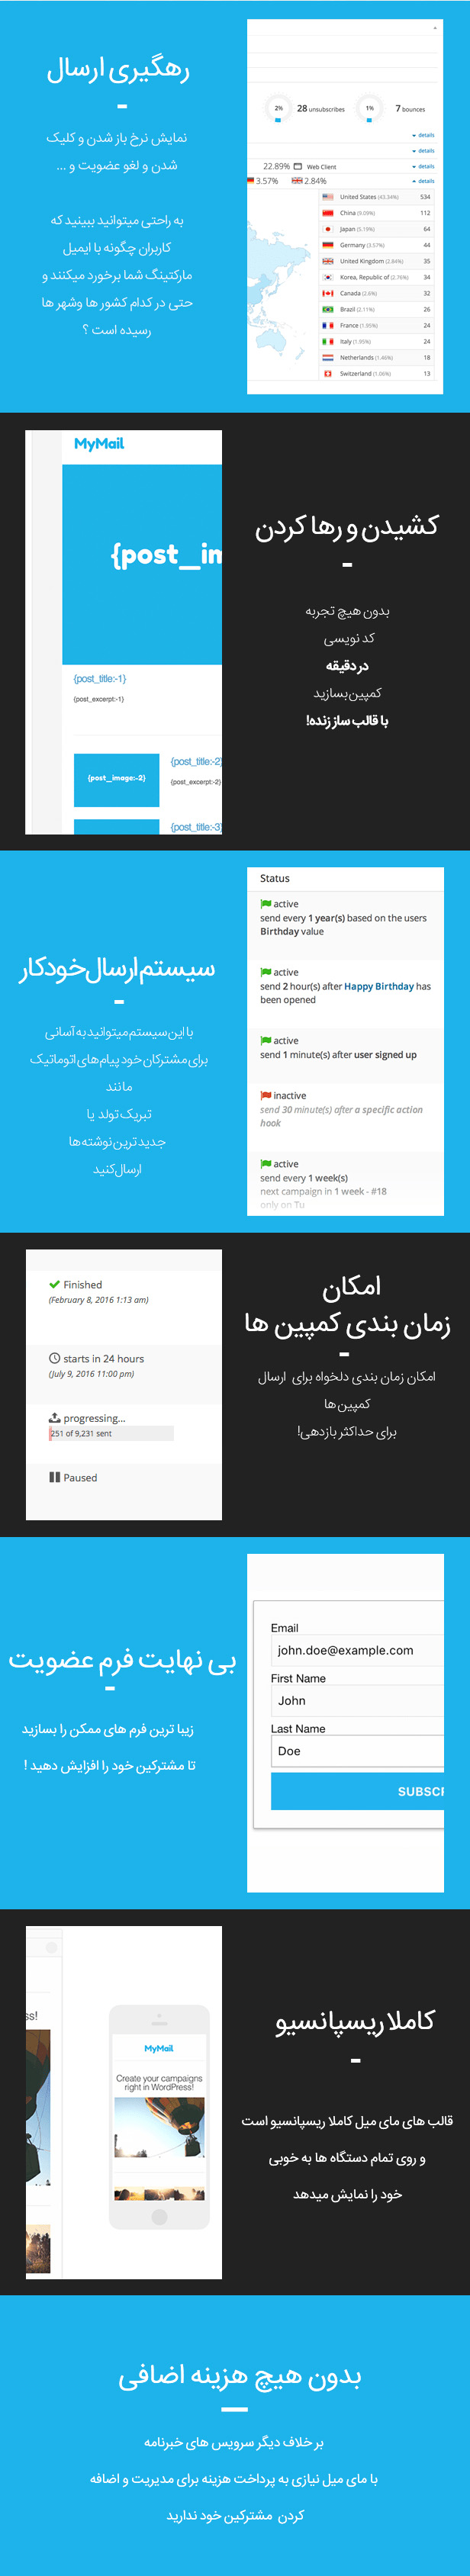 MyMail فارسی | خبرنامه فوق حرفه ای وردپرس | Mailster